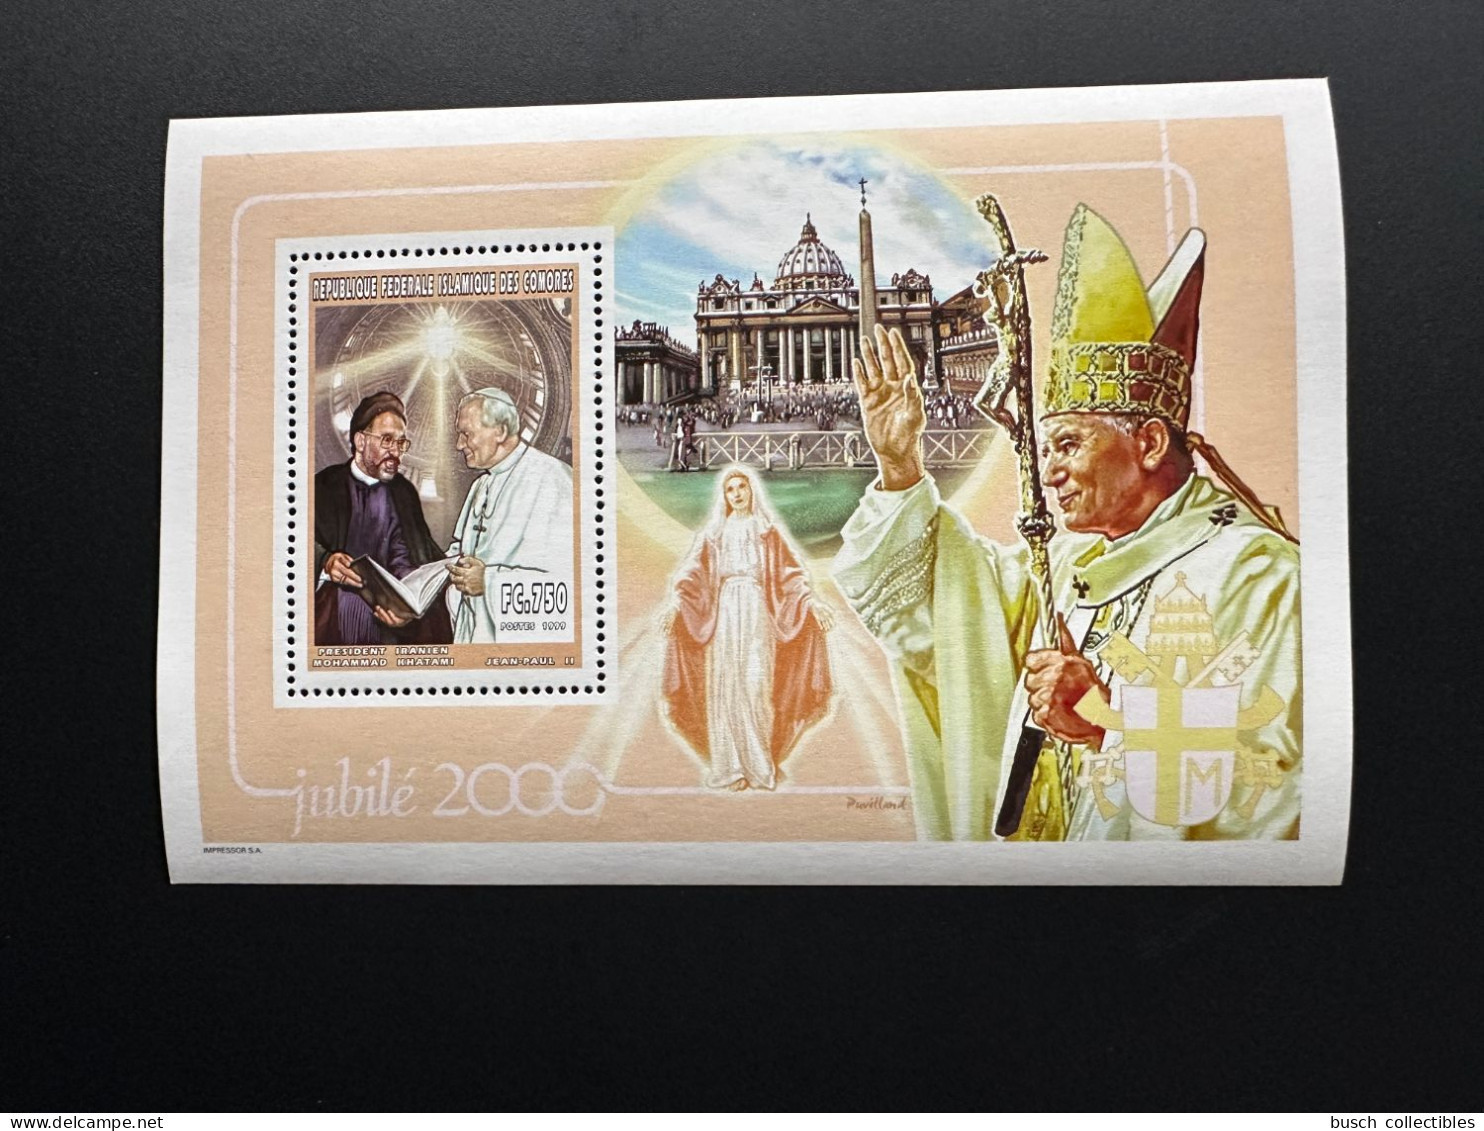 Comores Comoros Komoren 1999 YT 1123 Bloc De Luxe Pape Jean-Paul II Papst Johannes Paul Pope John Paul Iran Khatami - Päpste